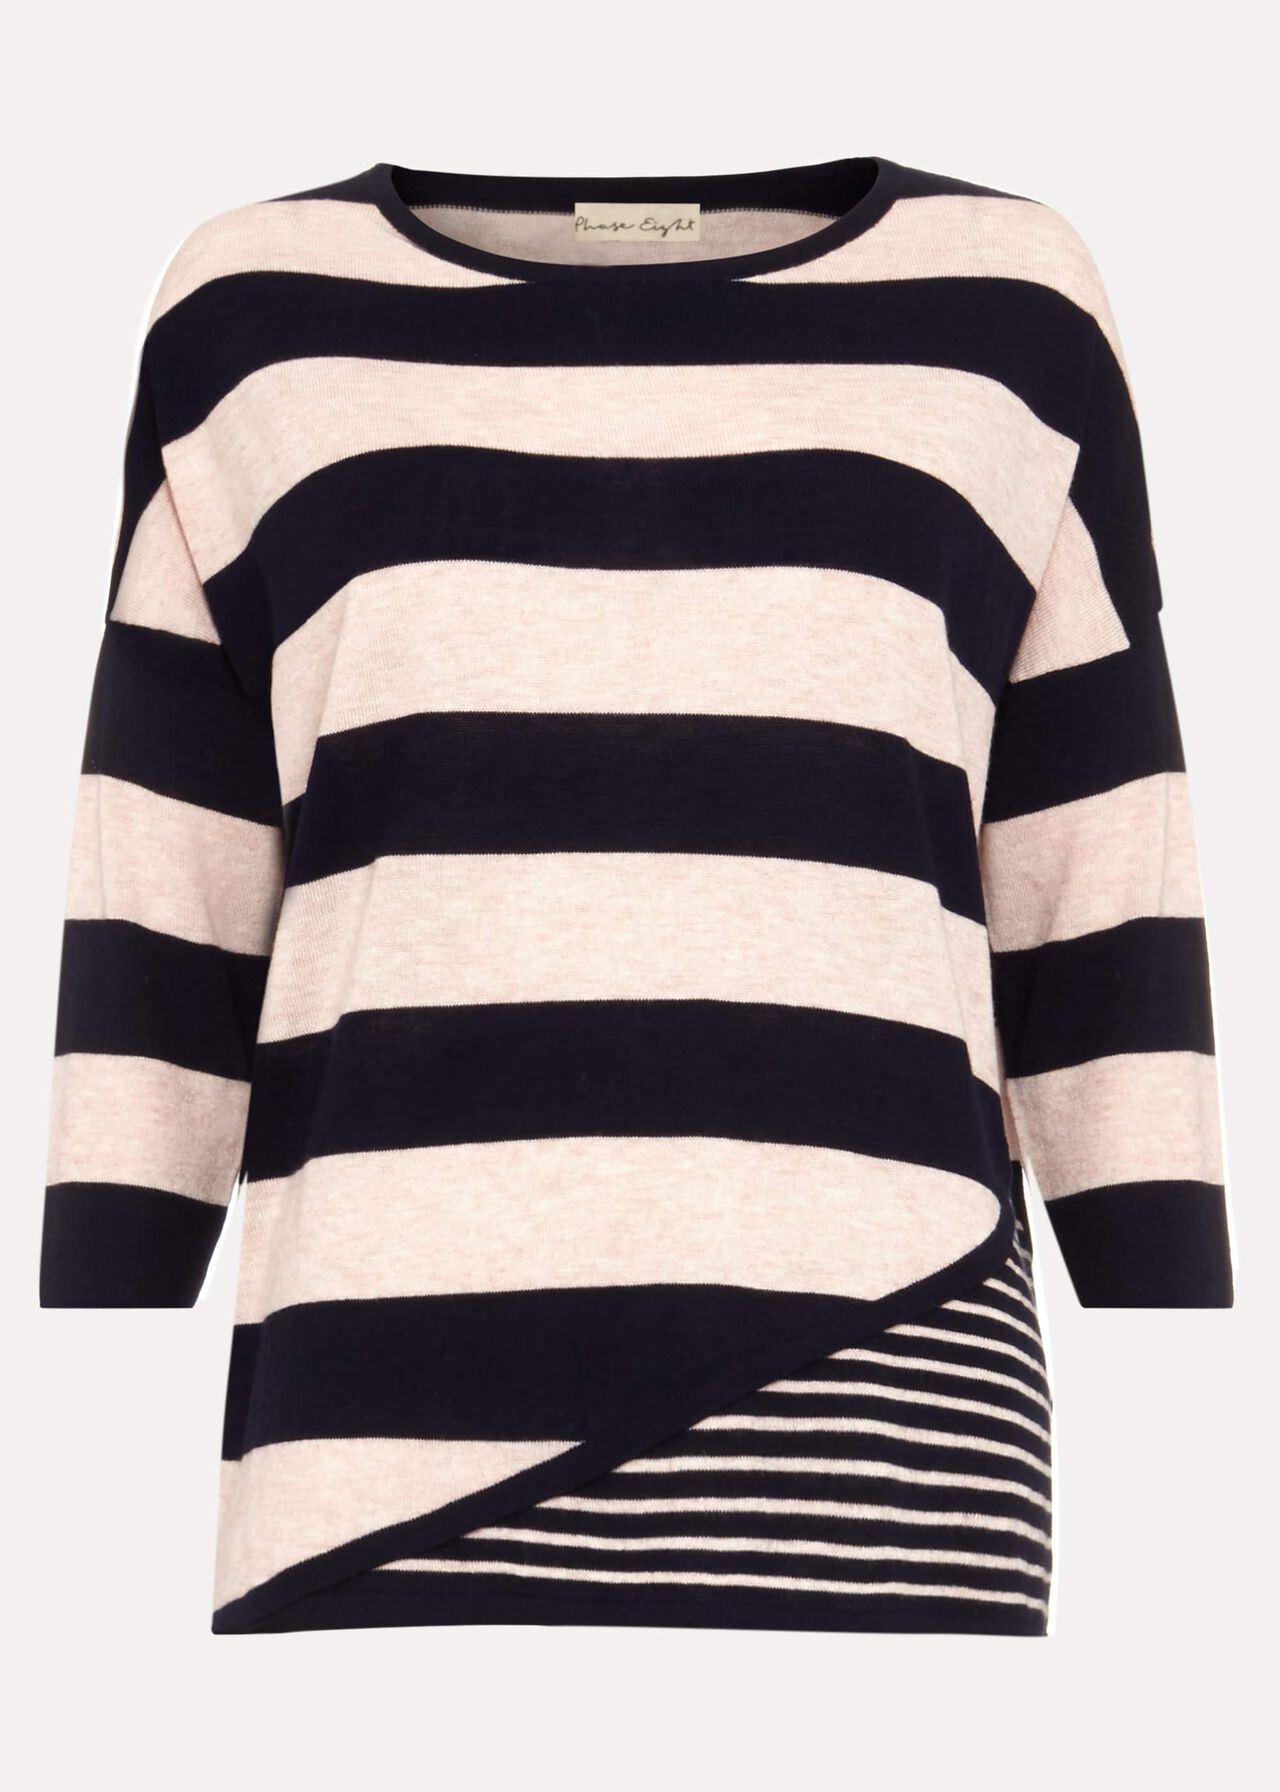 Devonna Mix Stripe Knitted Top